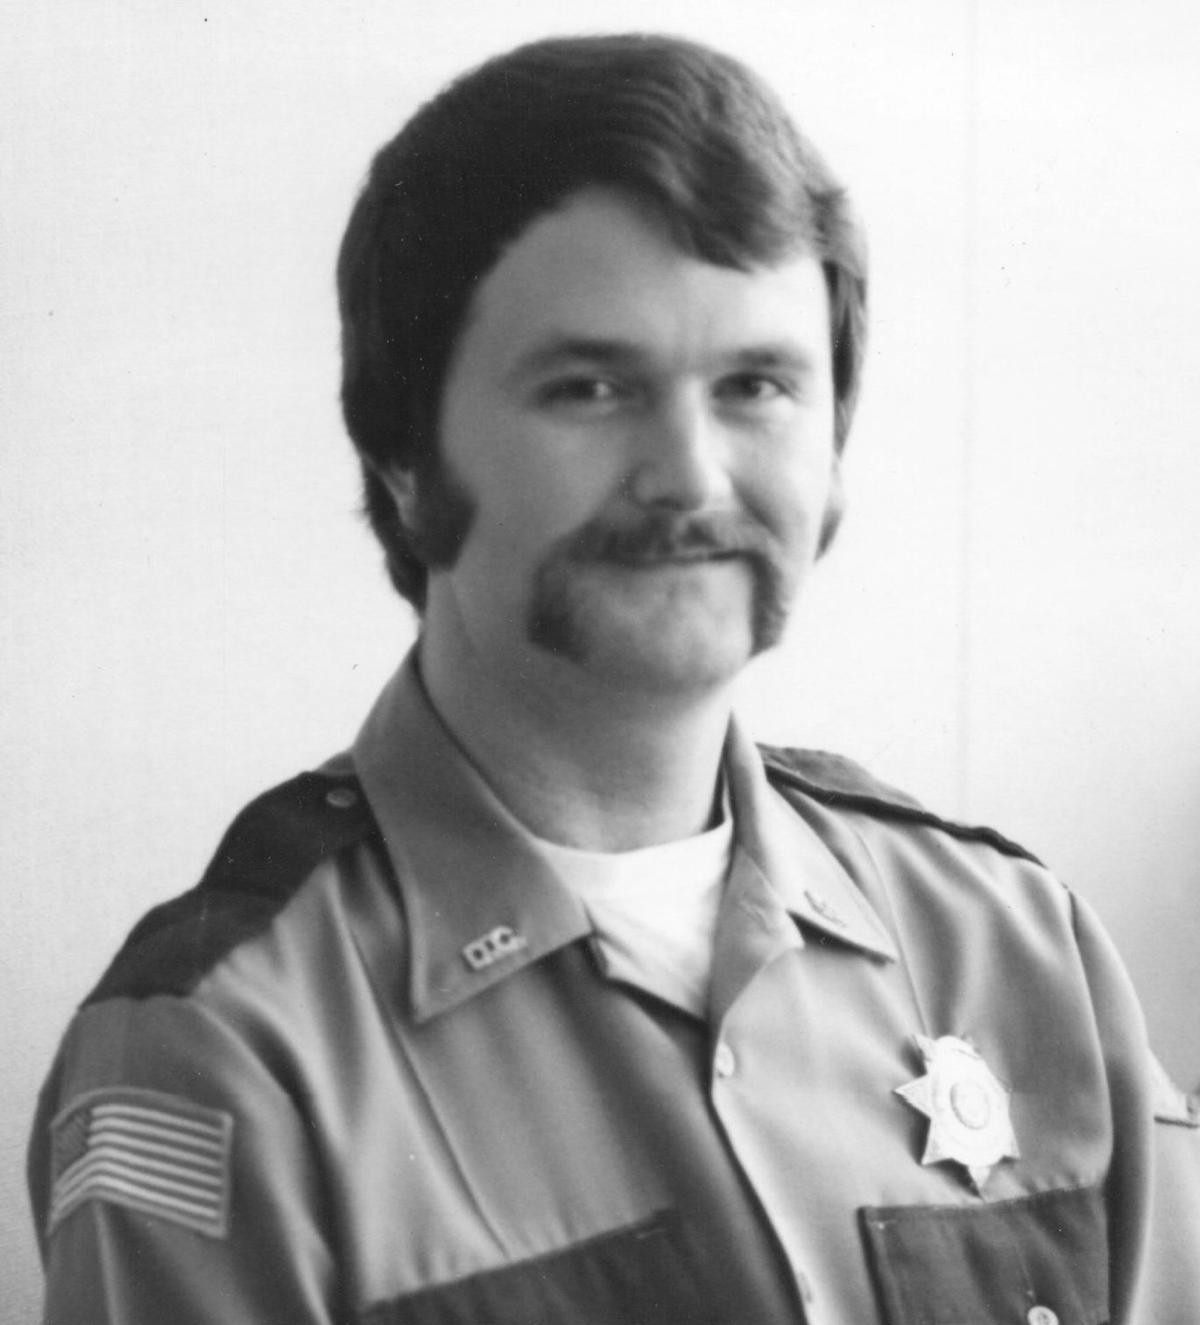 Deputy Sheriff Stanley 